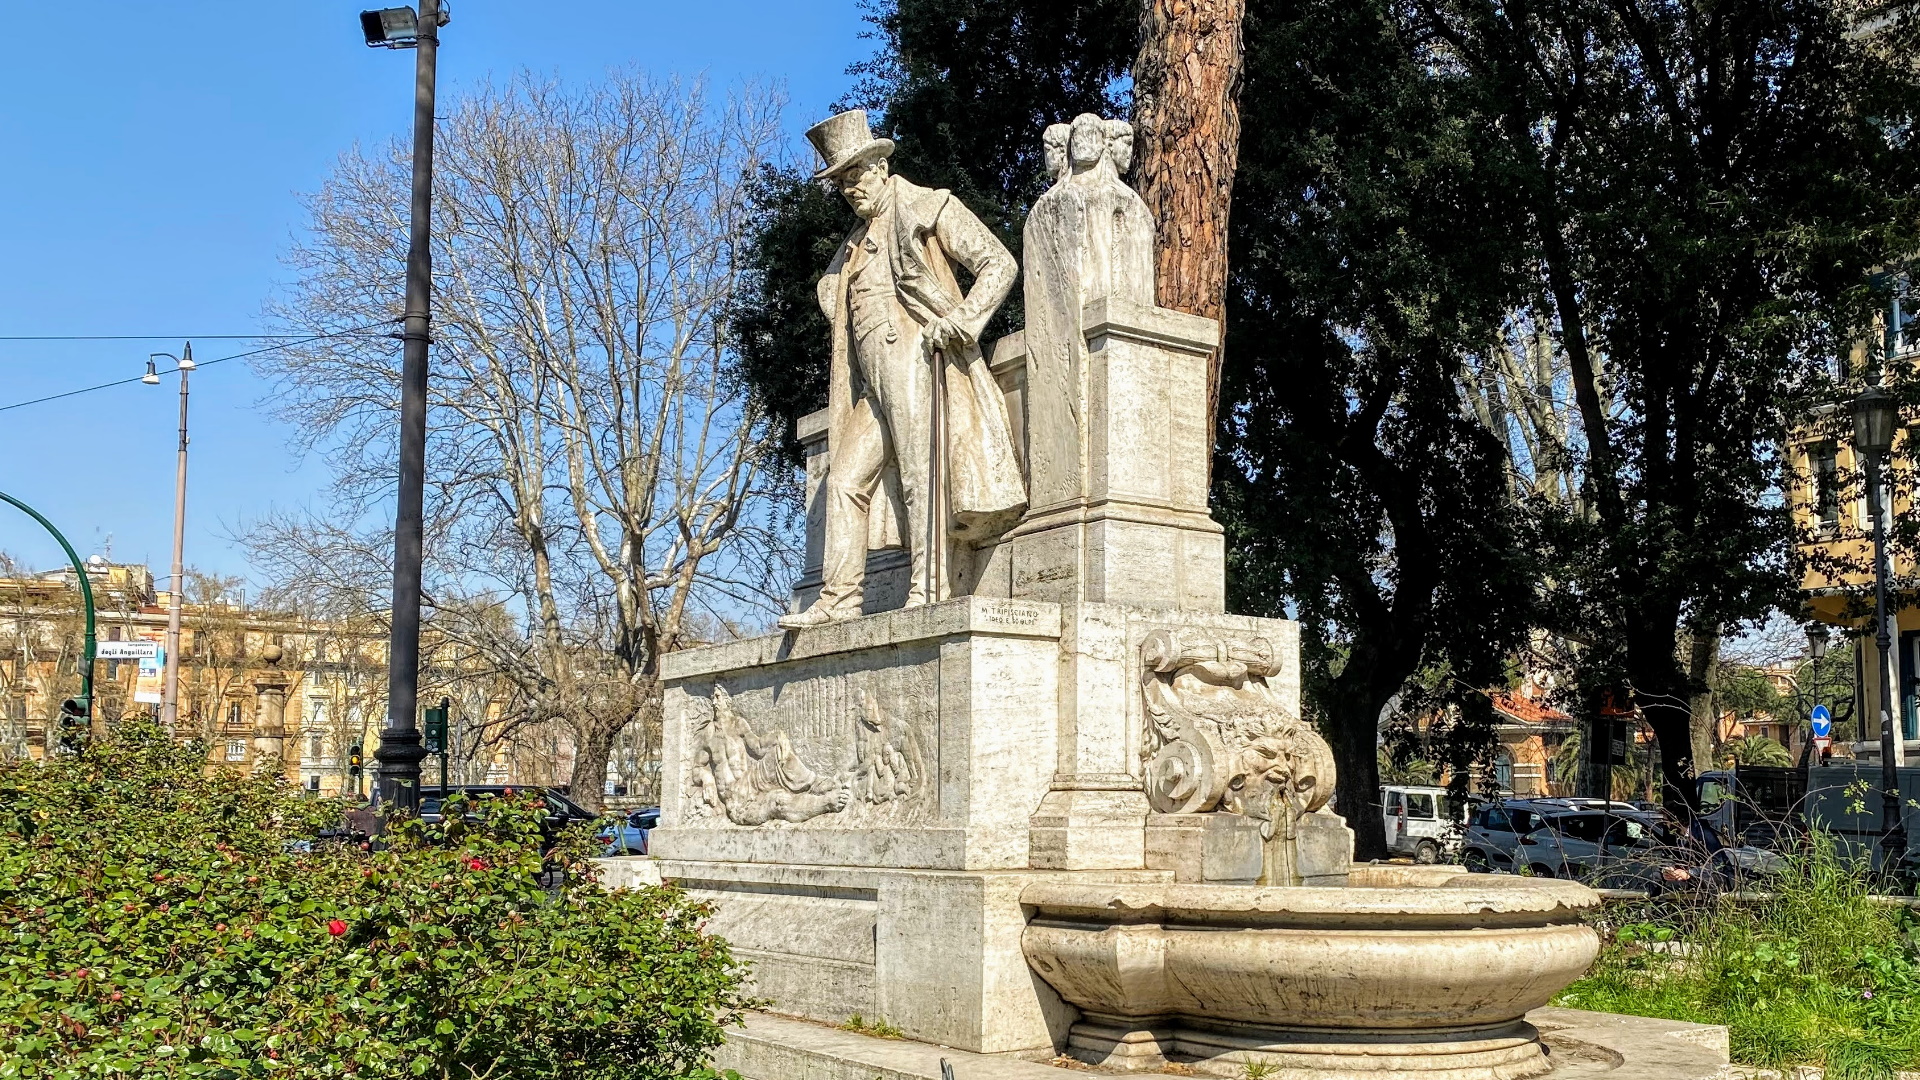 Fontana-Monumento a Giuseppe Gioachino Belli Foto Redazione Turismo Roma